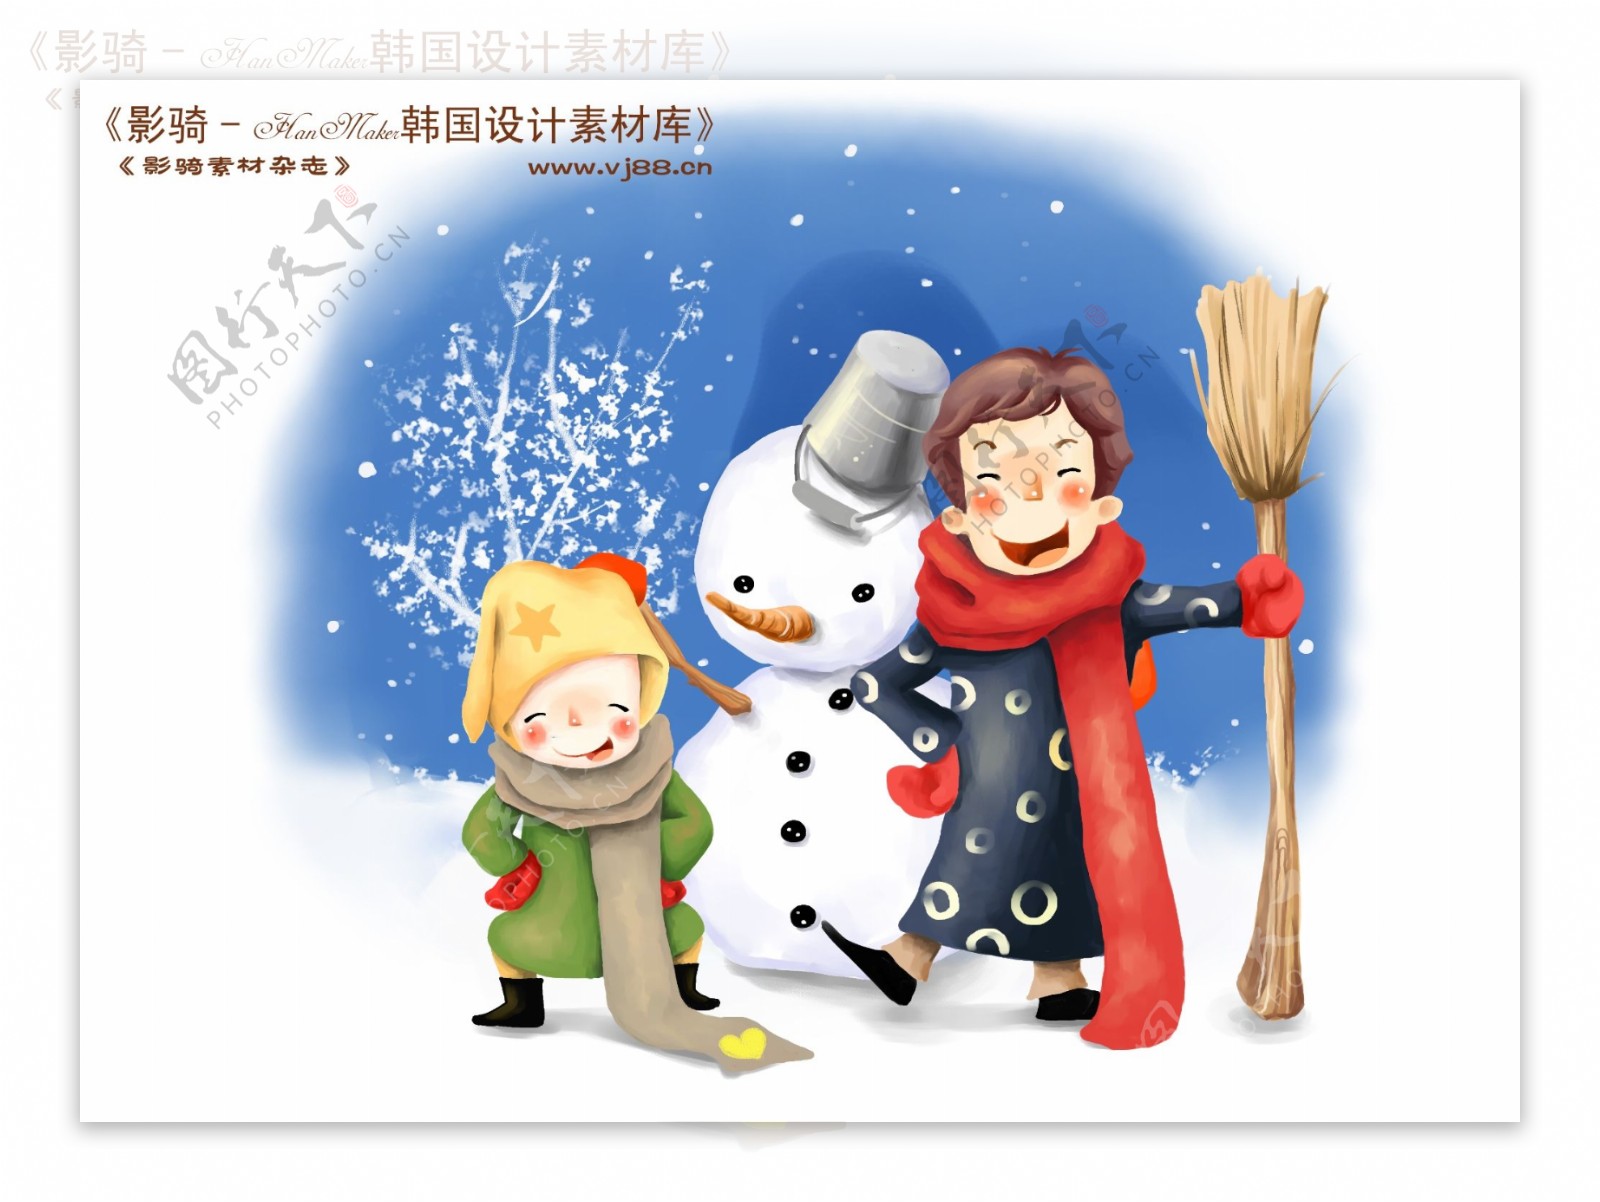 HanMaker韩国设计素材库背景卡通漫画可爱人物父子雪人儿童